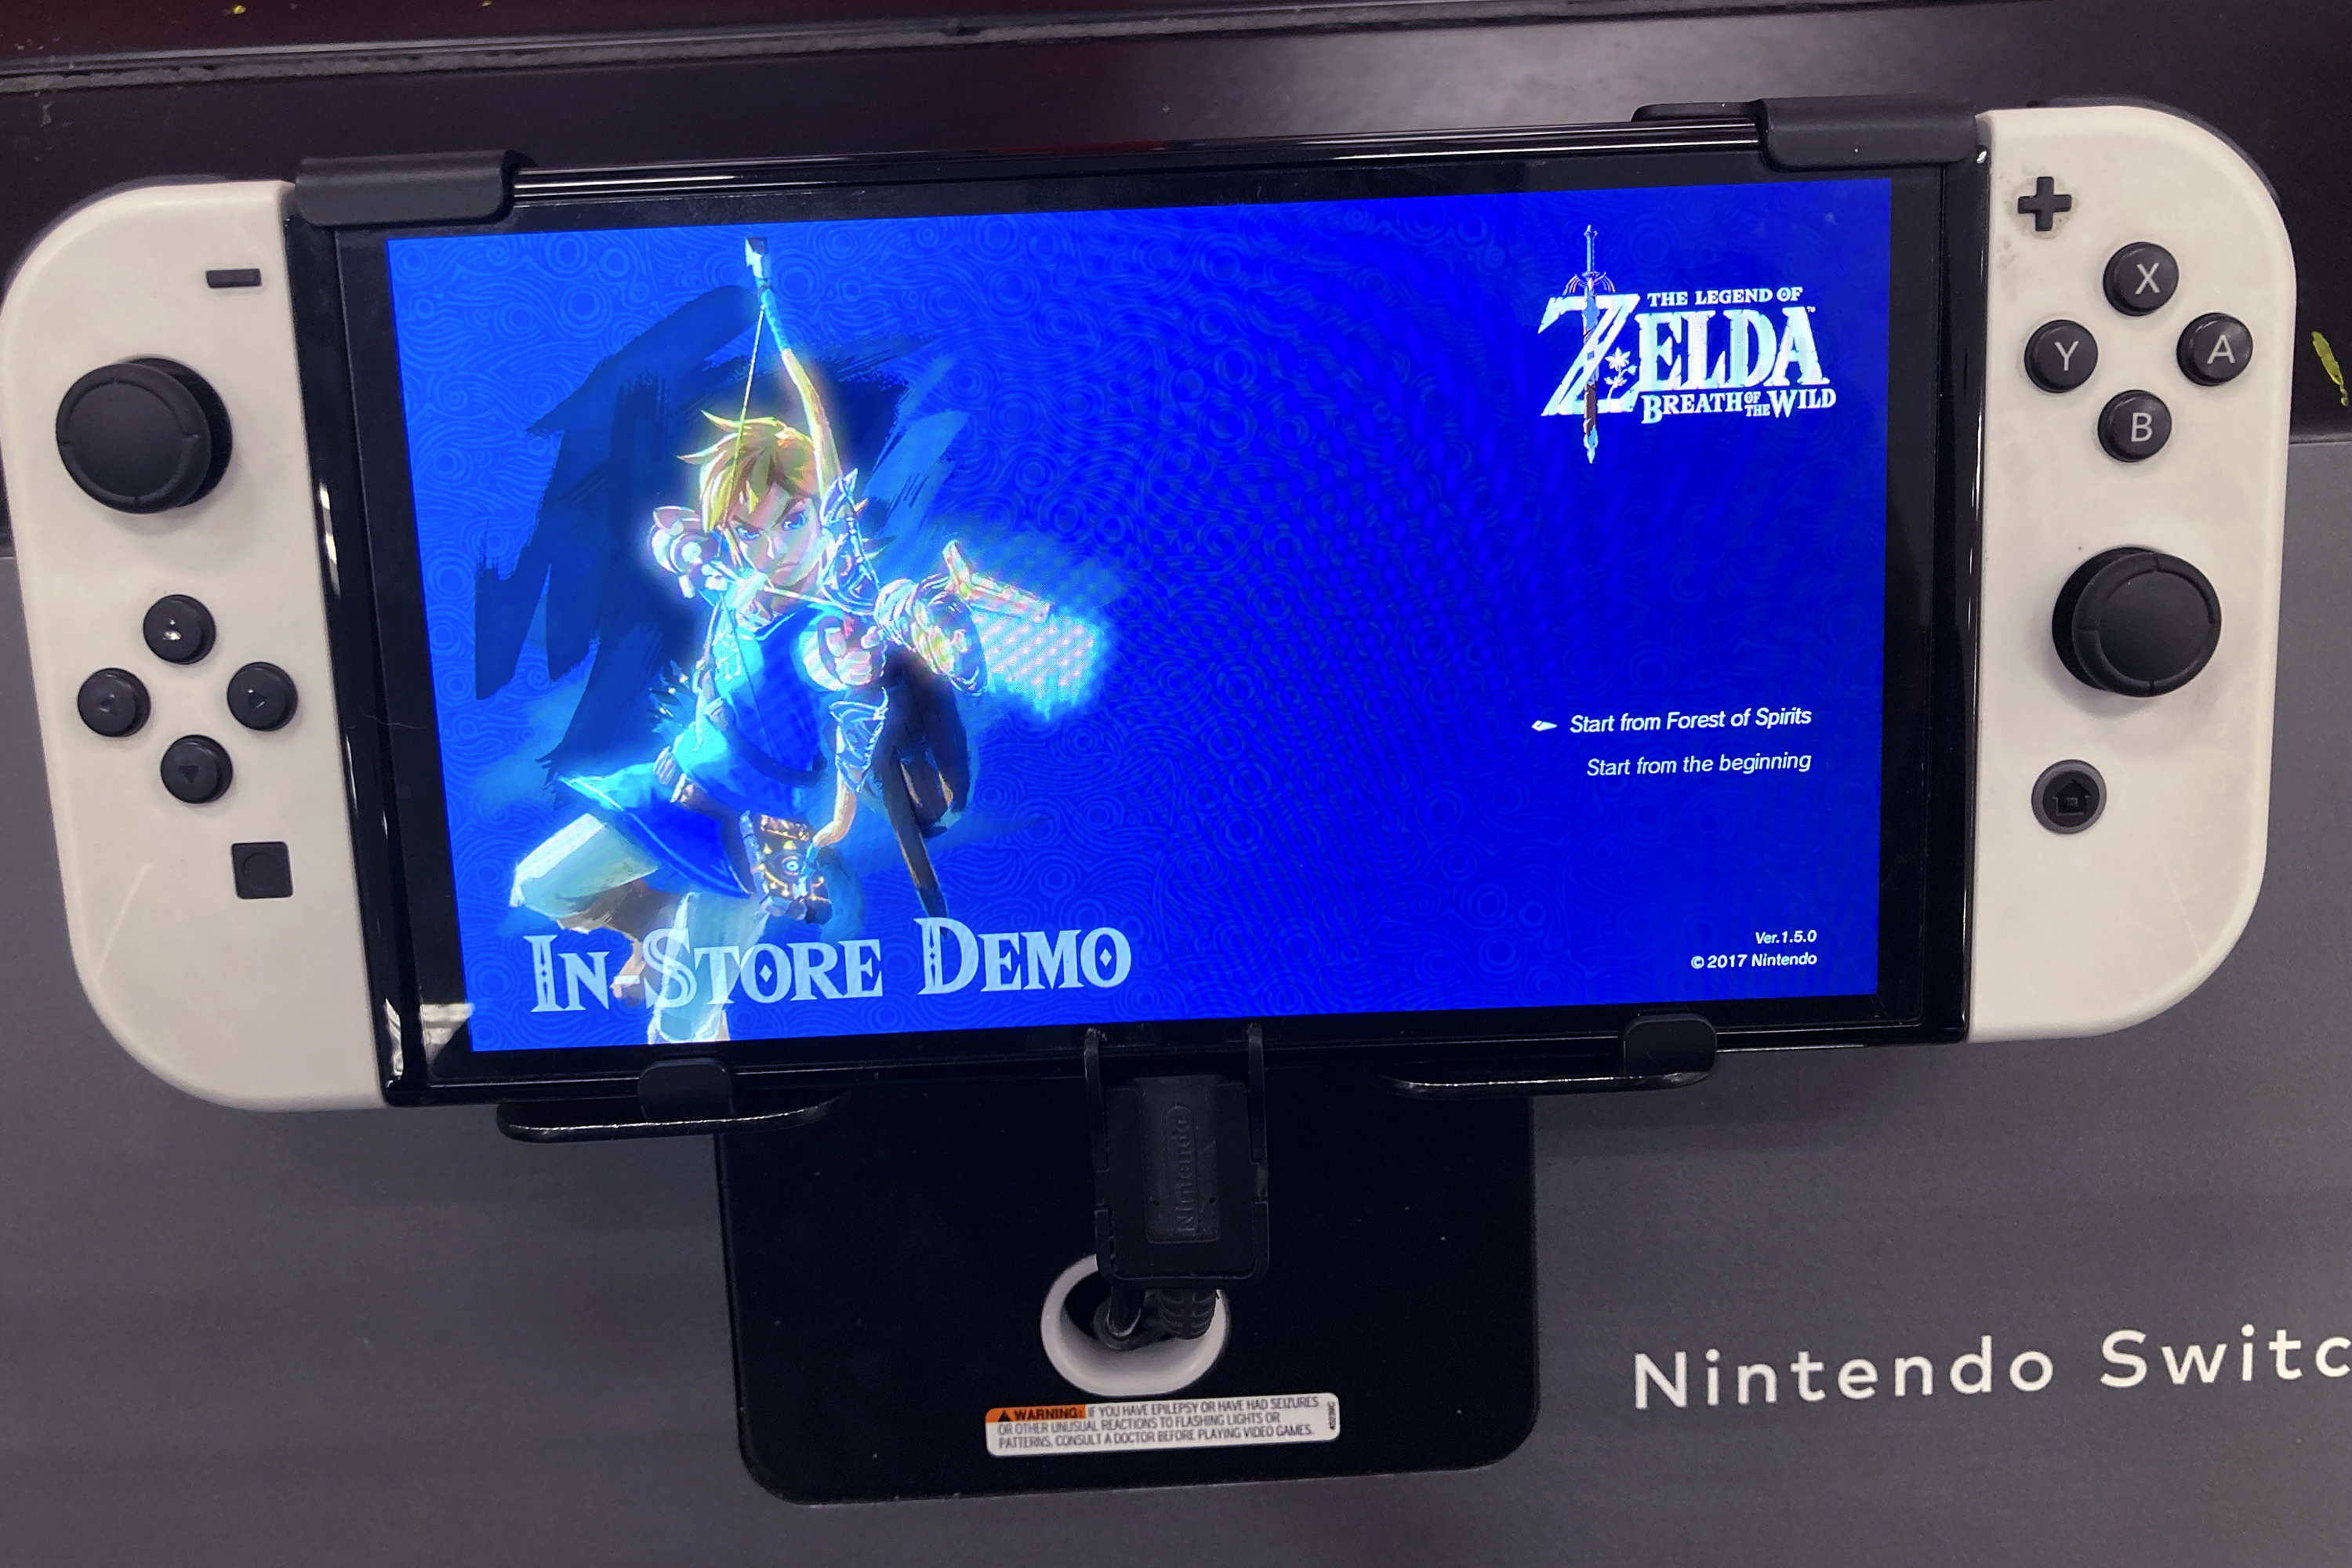 The Legend of Zelda: Breath of the Wild - Nintendo Switch (semi